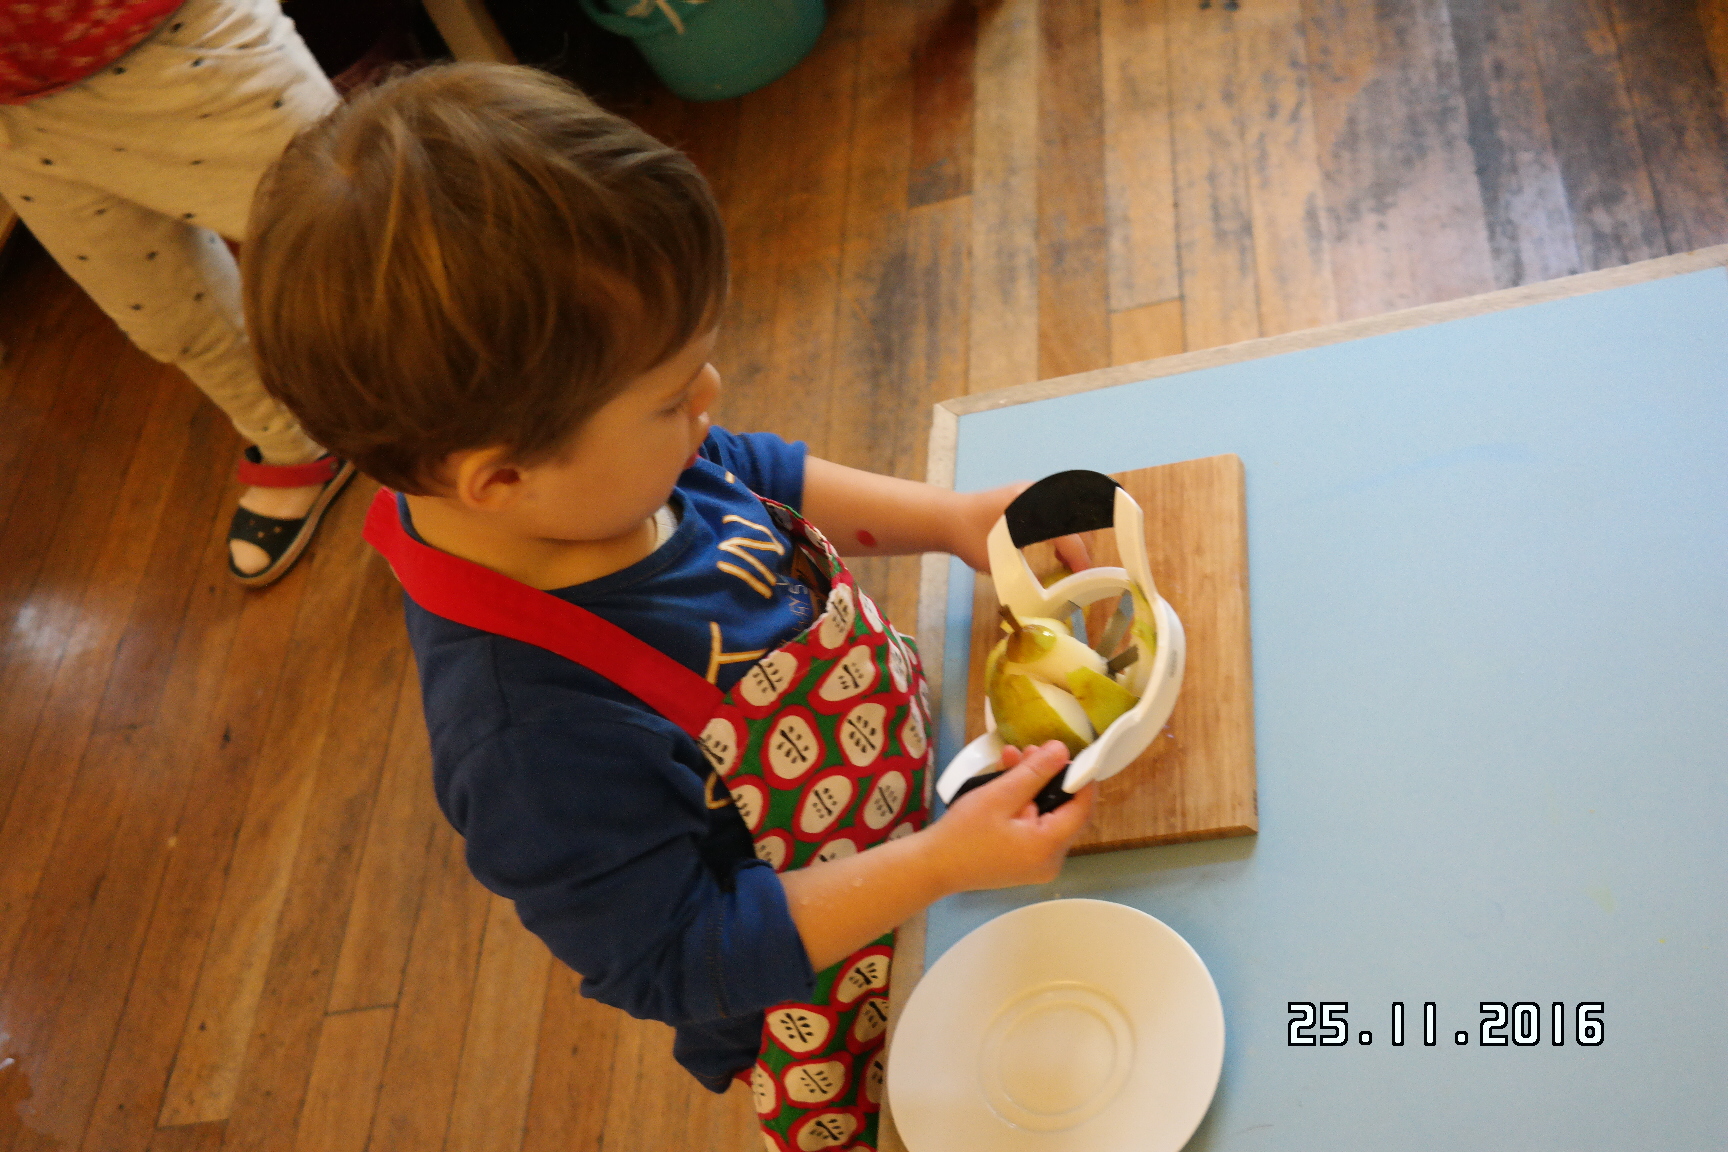 Child preparing a pear for snack. 